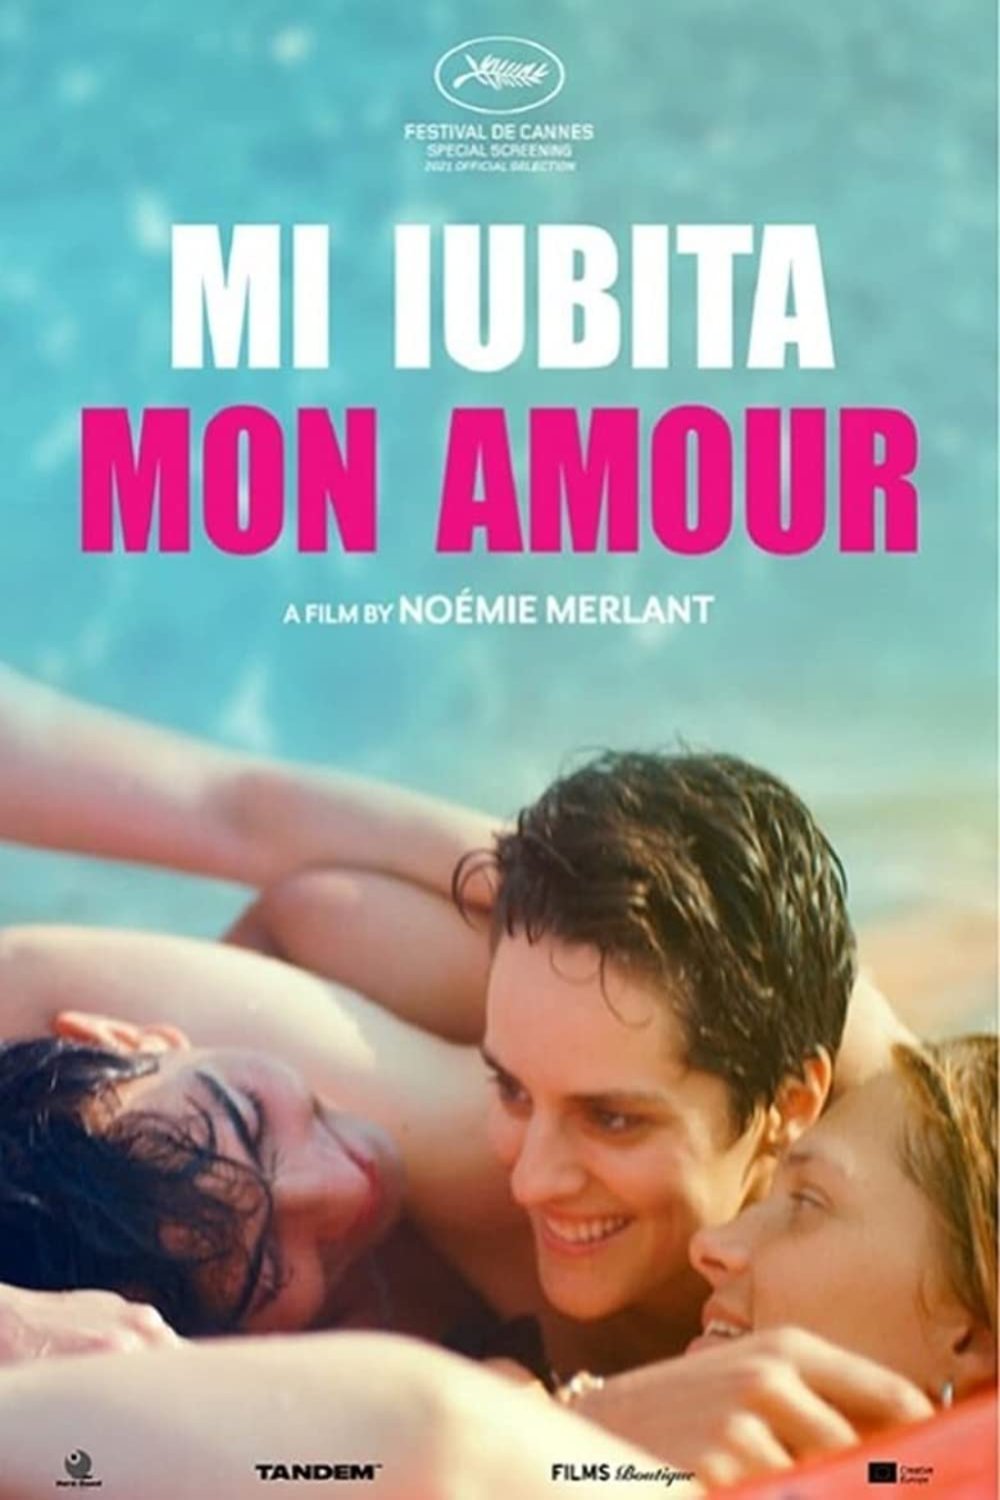 Poster of the movie Mi iubita, mon amour